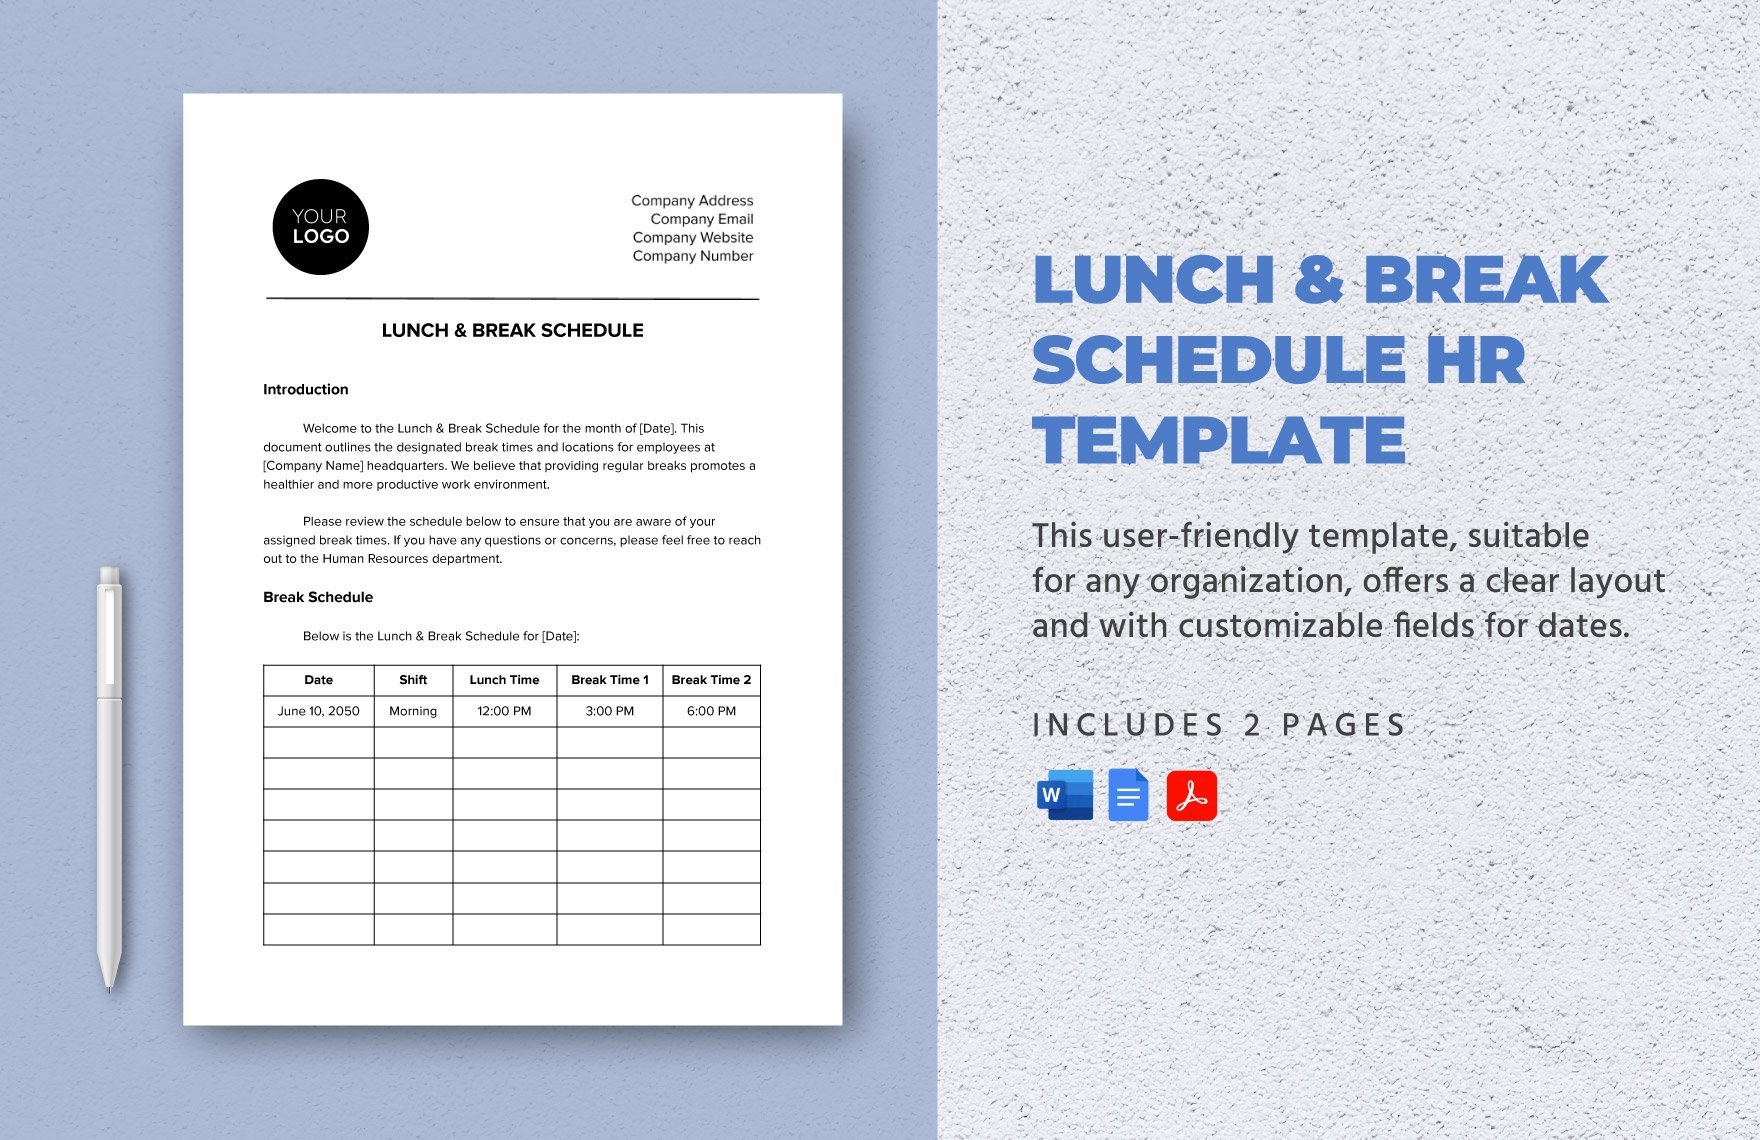 Lunch & Break Schedule HR Template